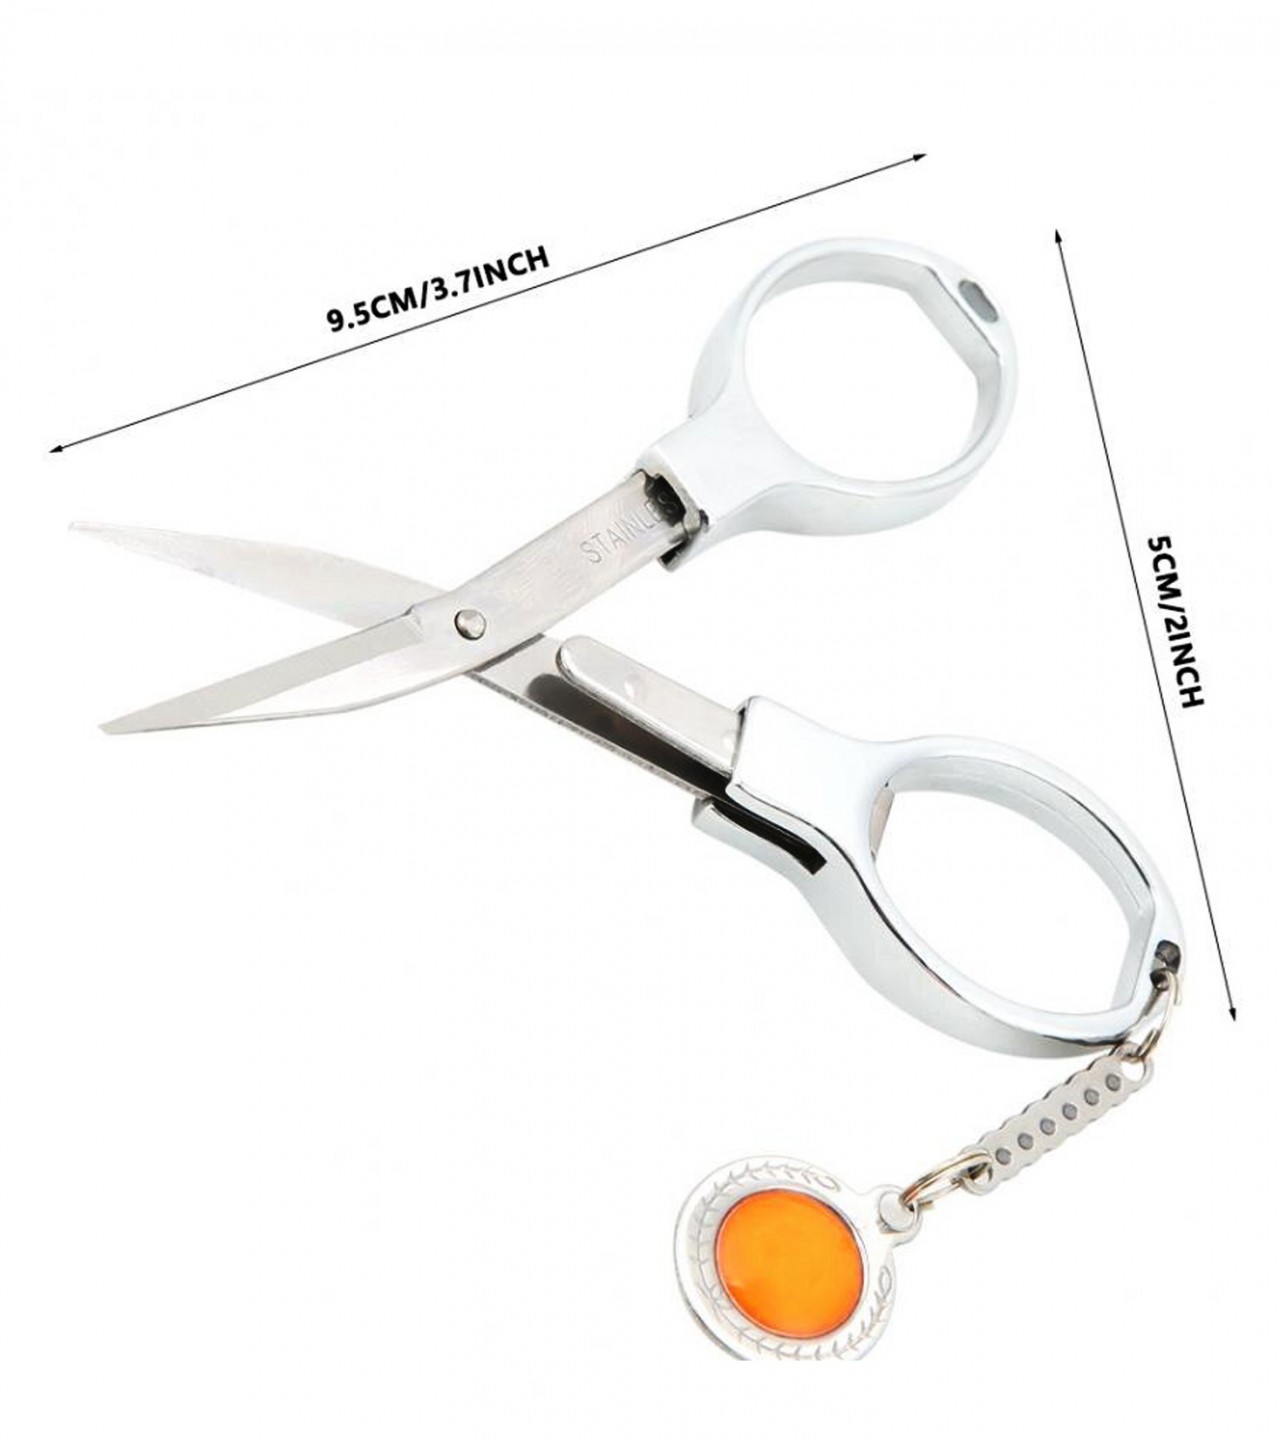 Mini Stainless Steel Folding Scissor with Key Chain - Silver